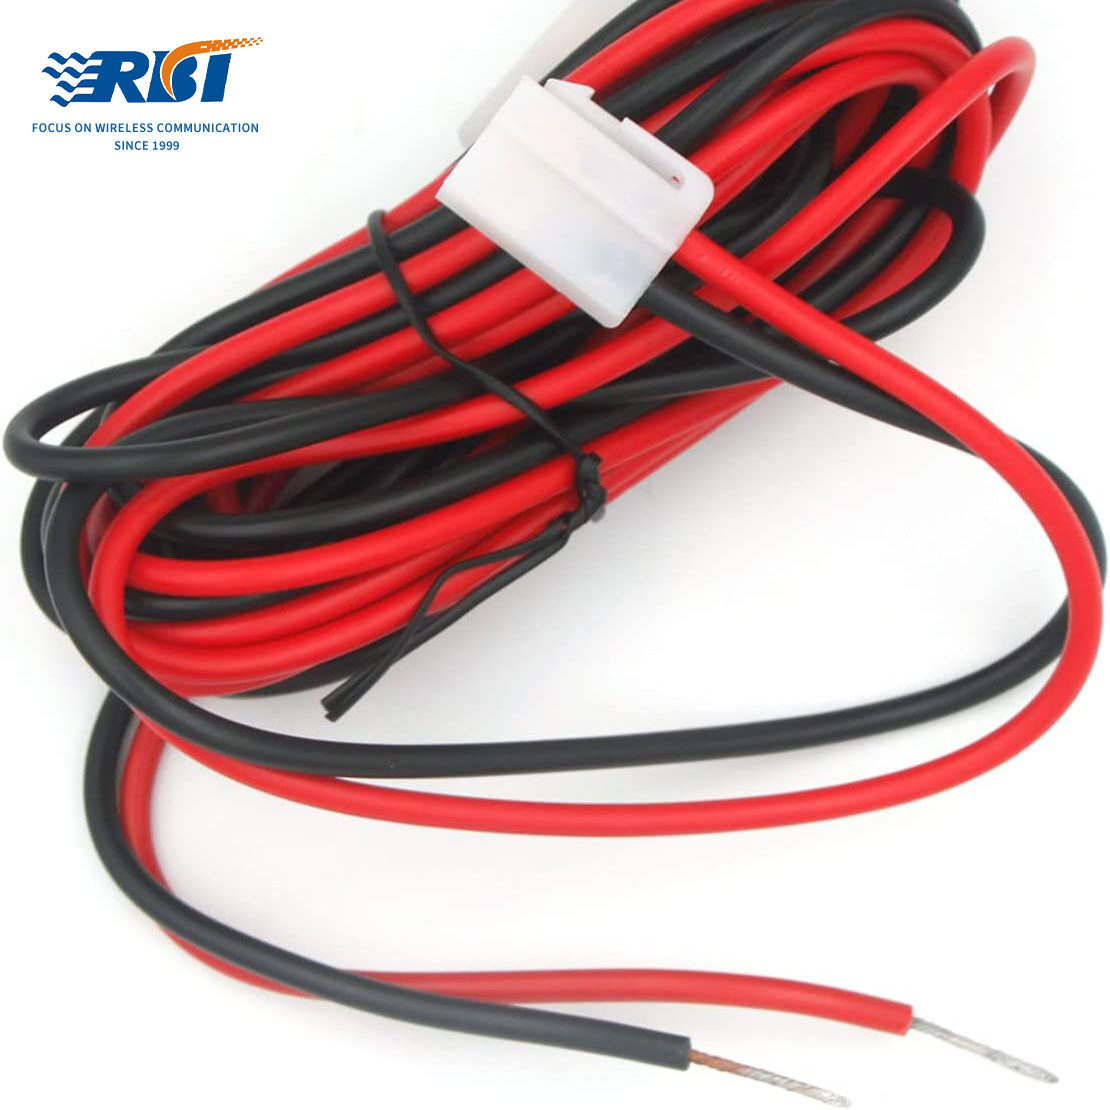 Yaesu FT-7800Rpower cable